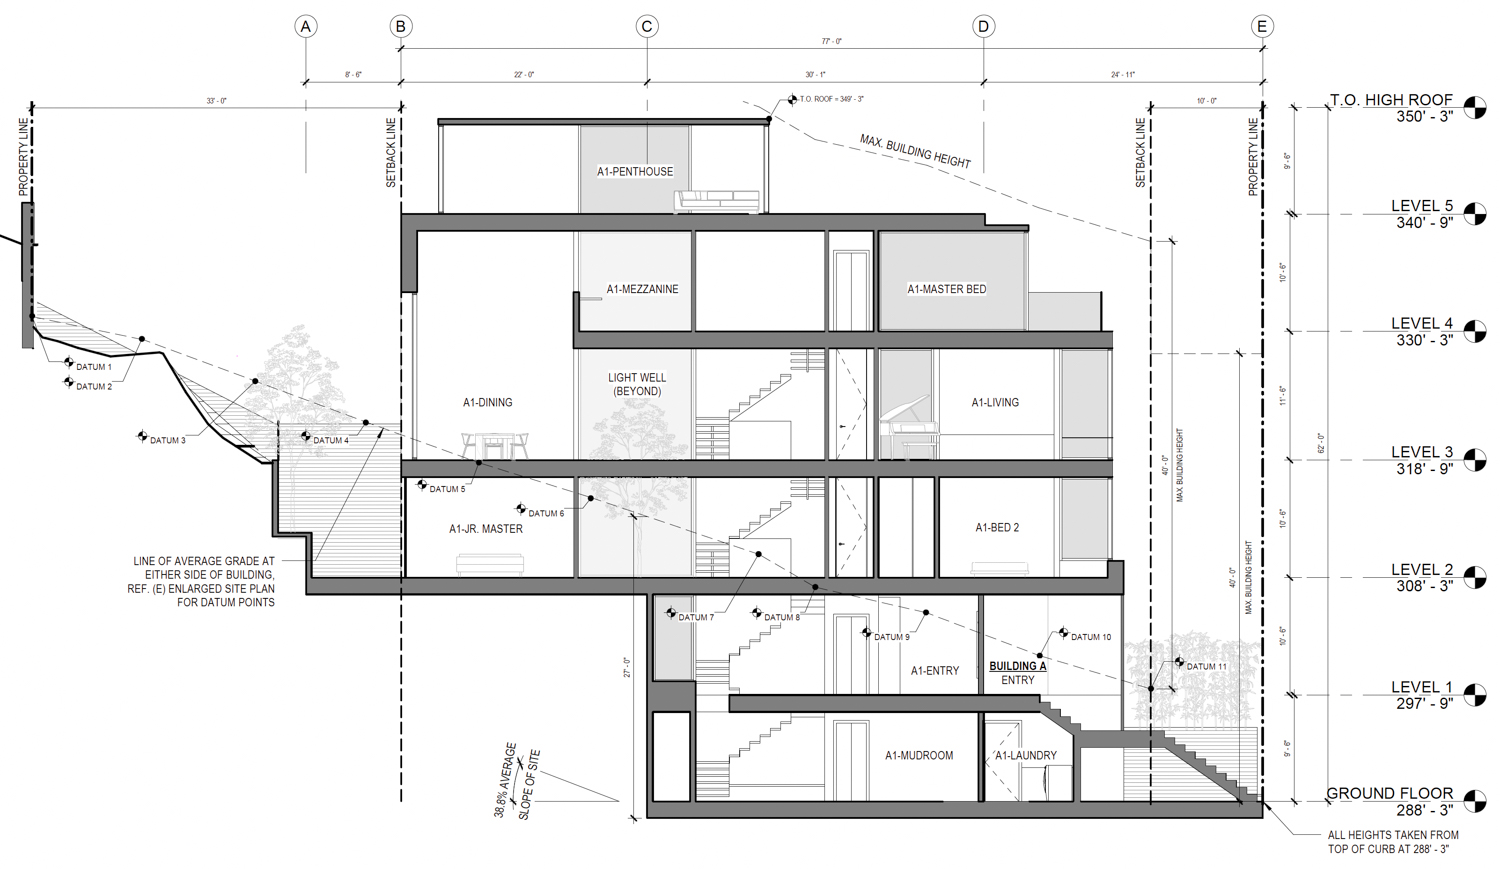 144 Laidley Street eastern elevation, illustration by EYRC Architects